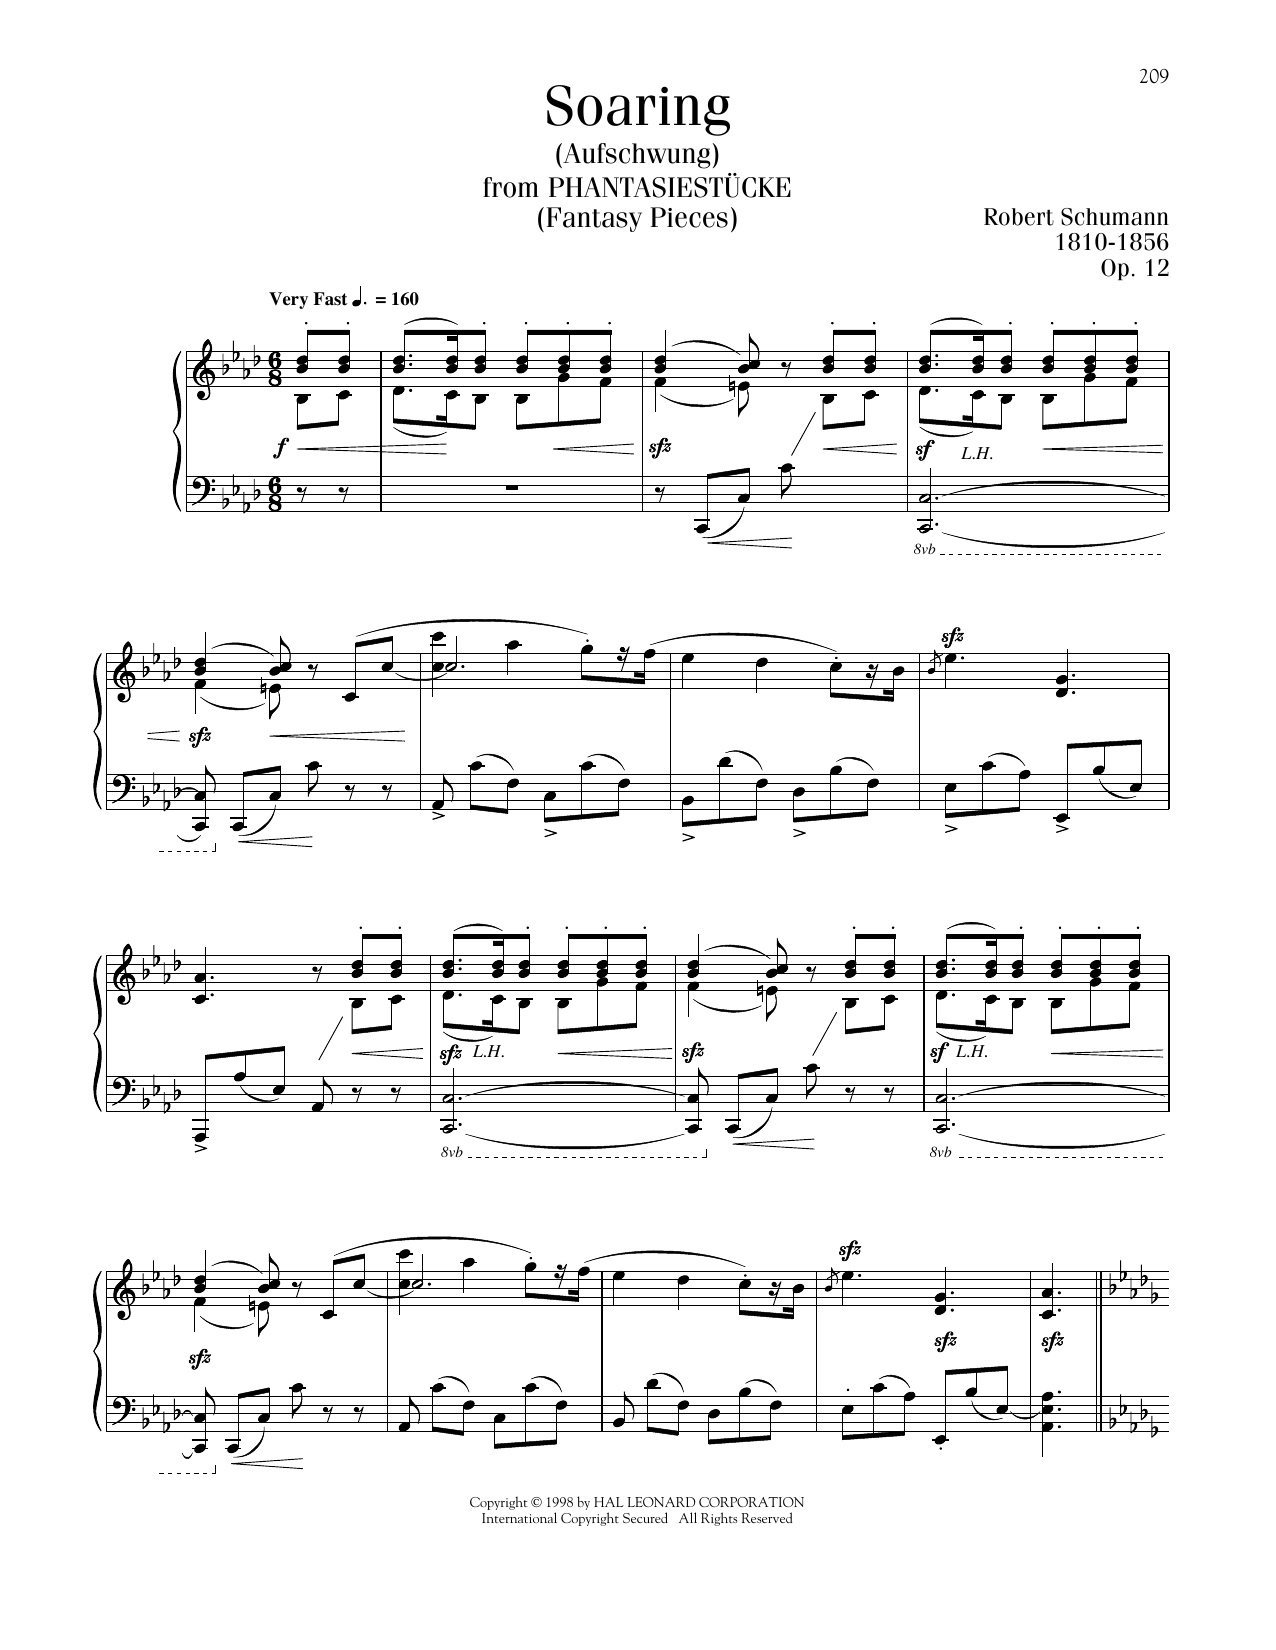 Robert Schumann Soaring (Aufschwung), Op. 12, No. 2 Sheet Music Notes & Chords for Piano Solo - Download or Print PDF